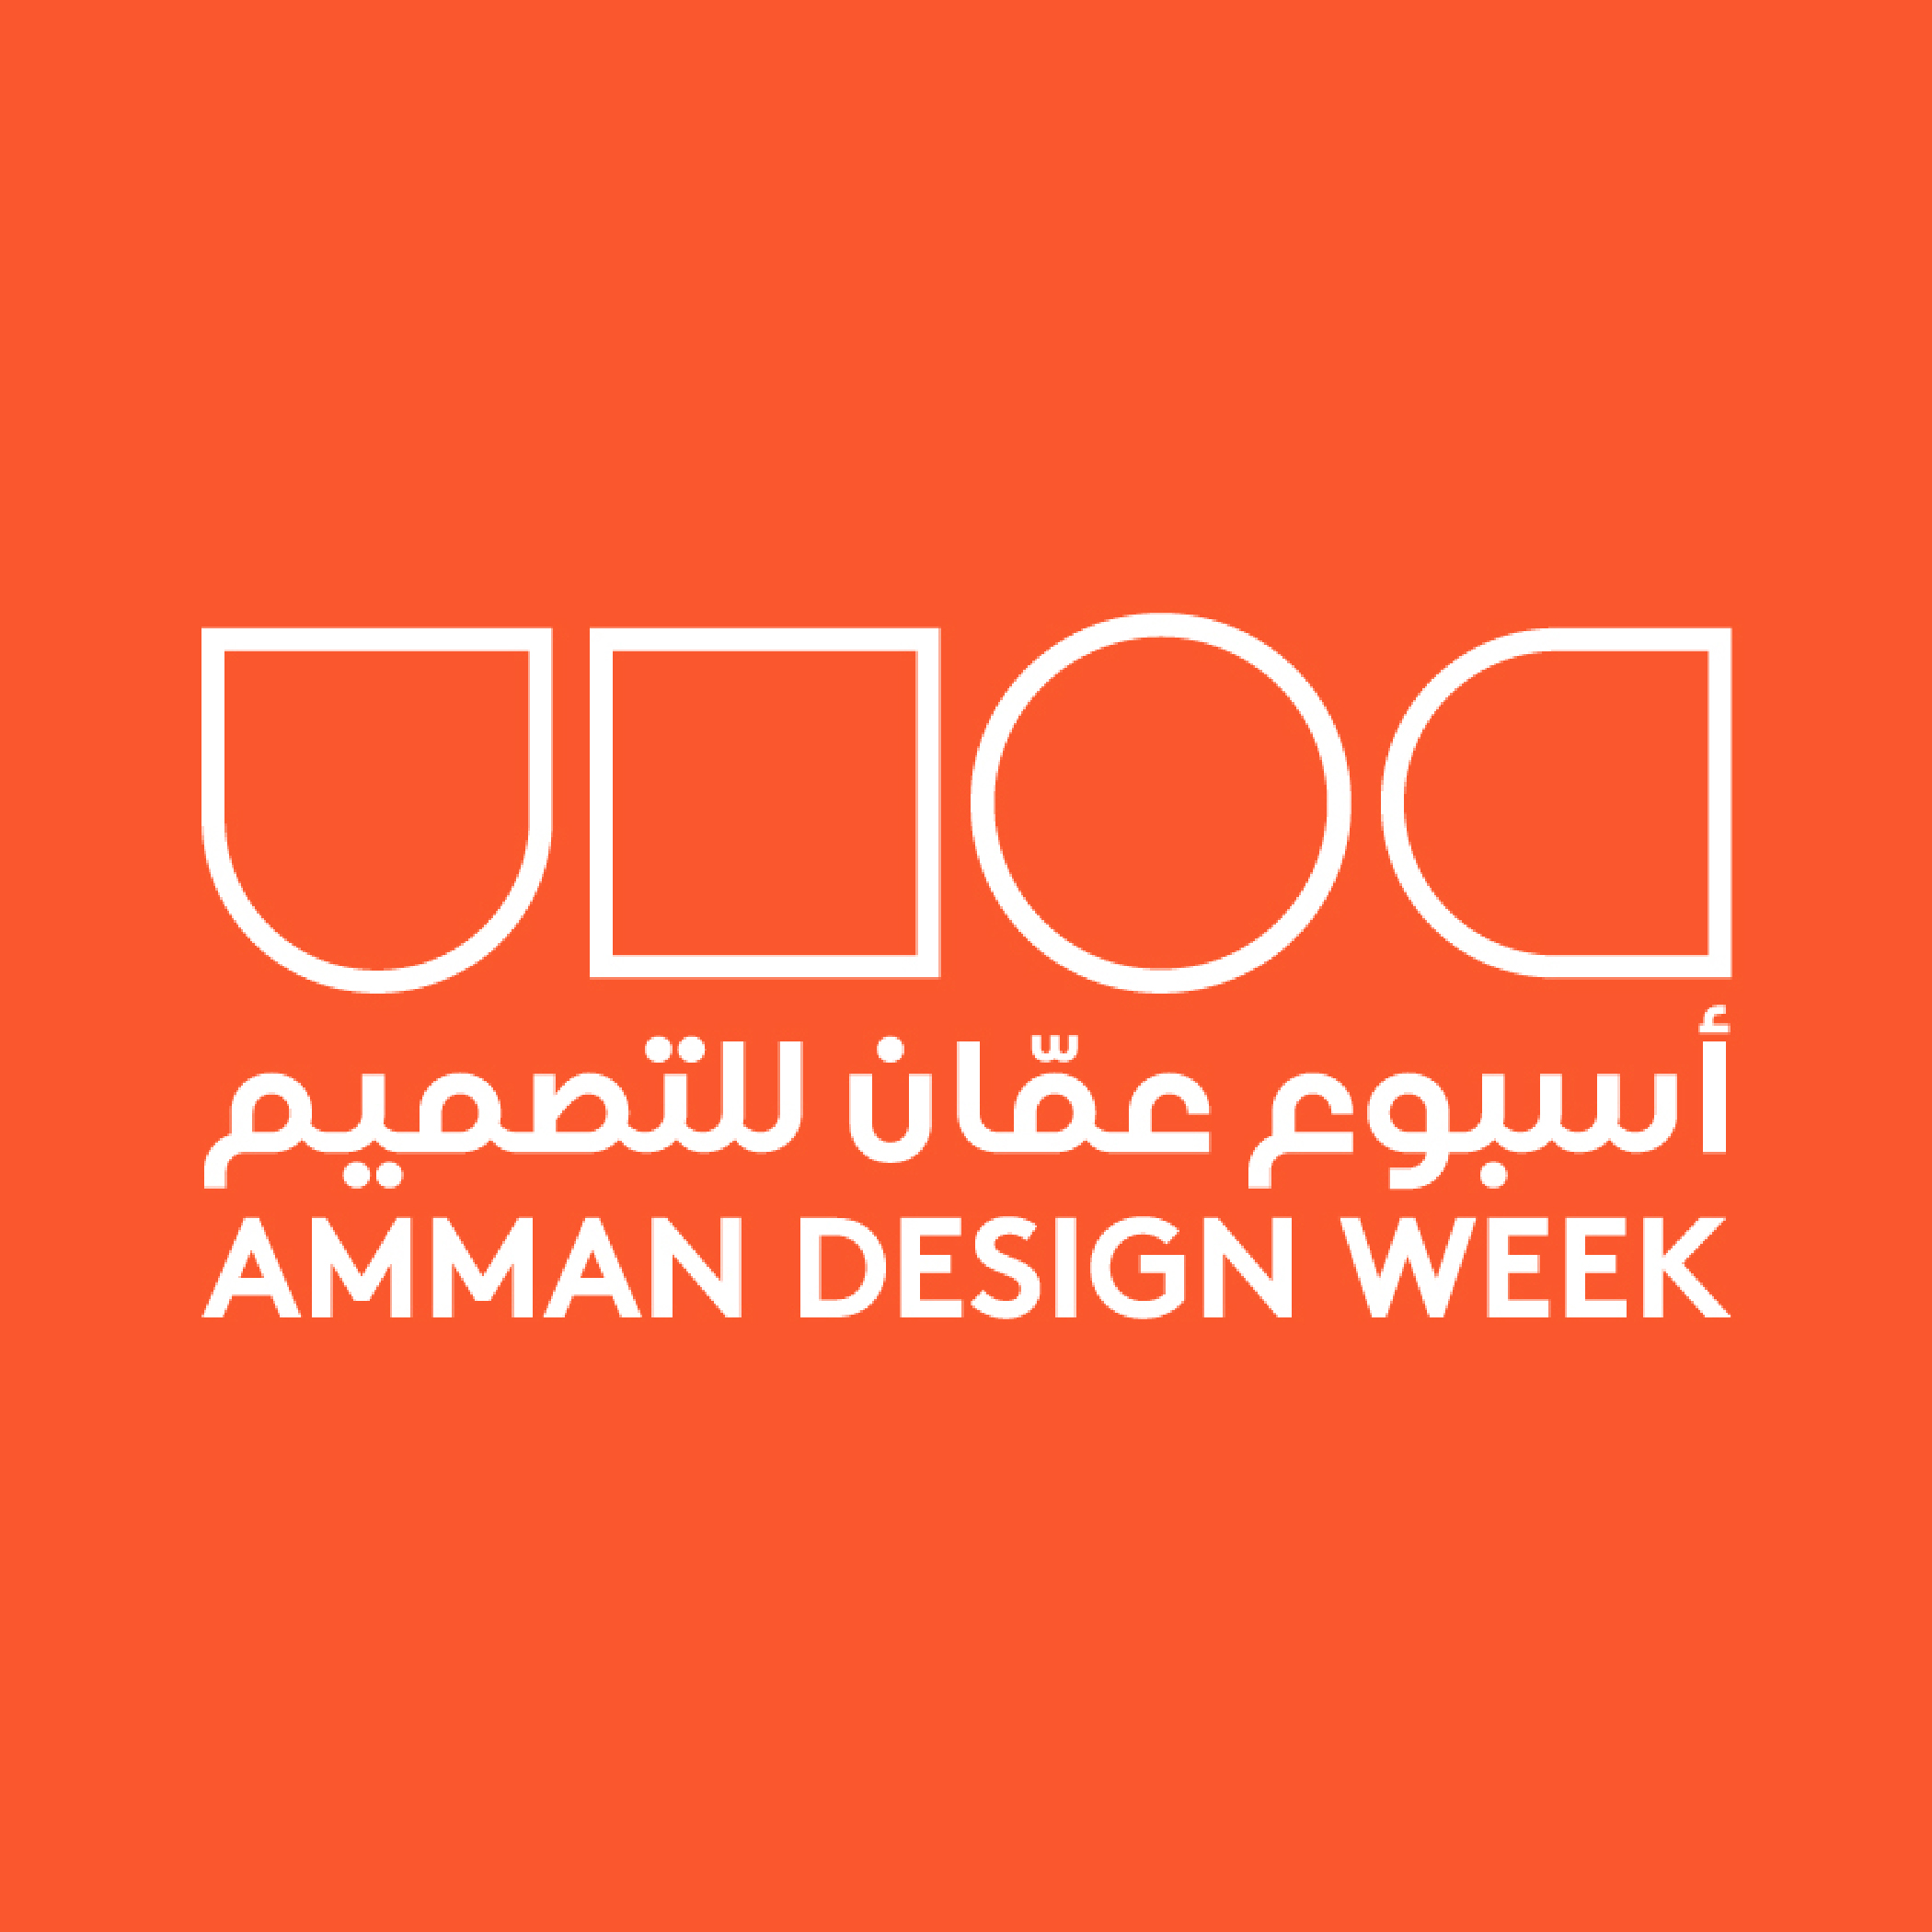 Amman design week logo